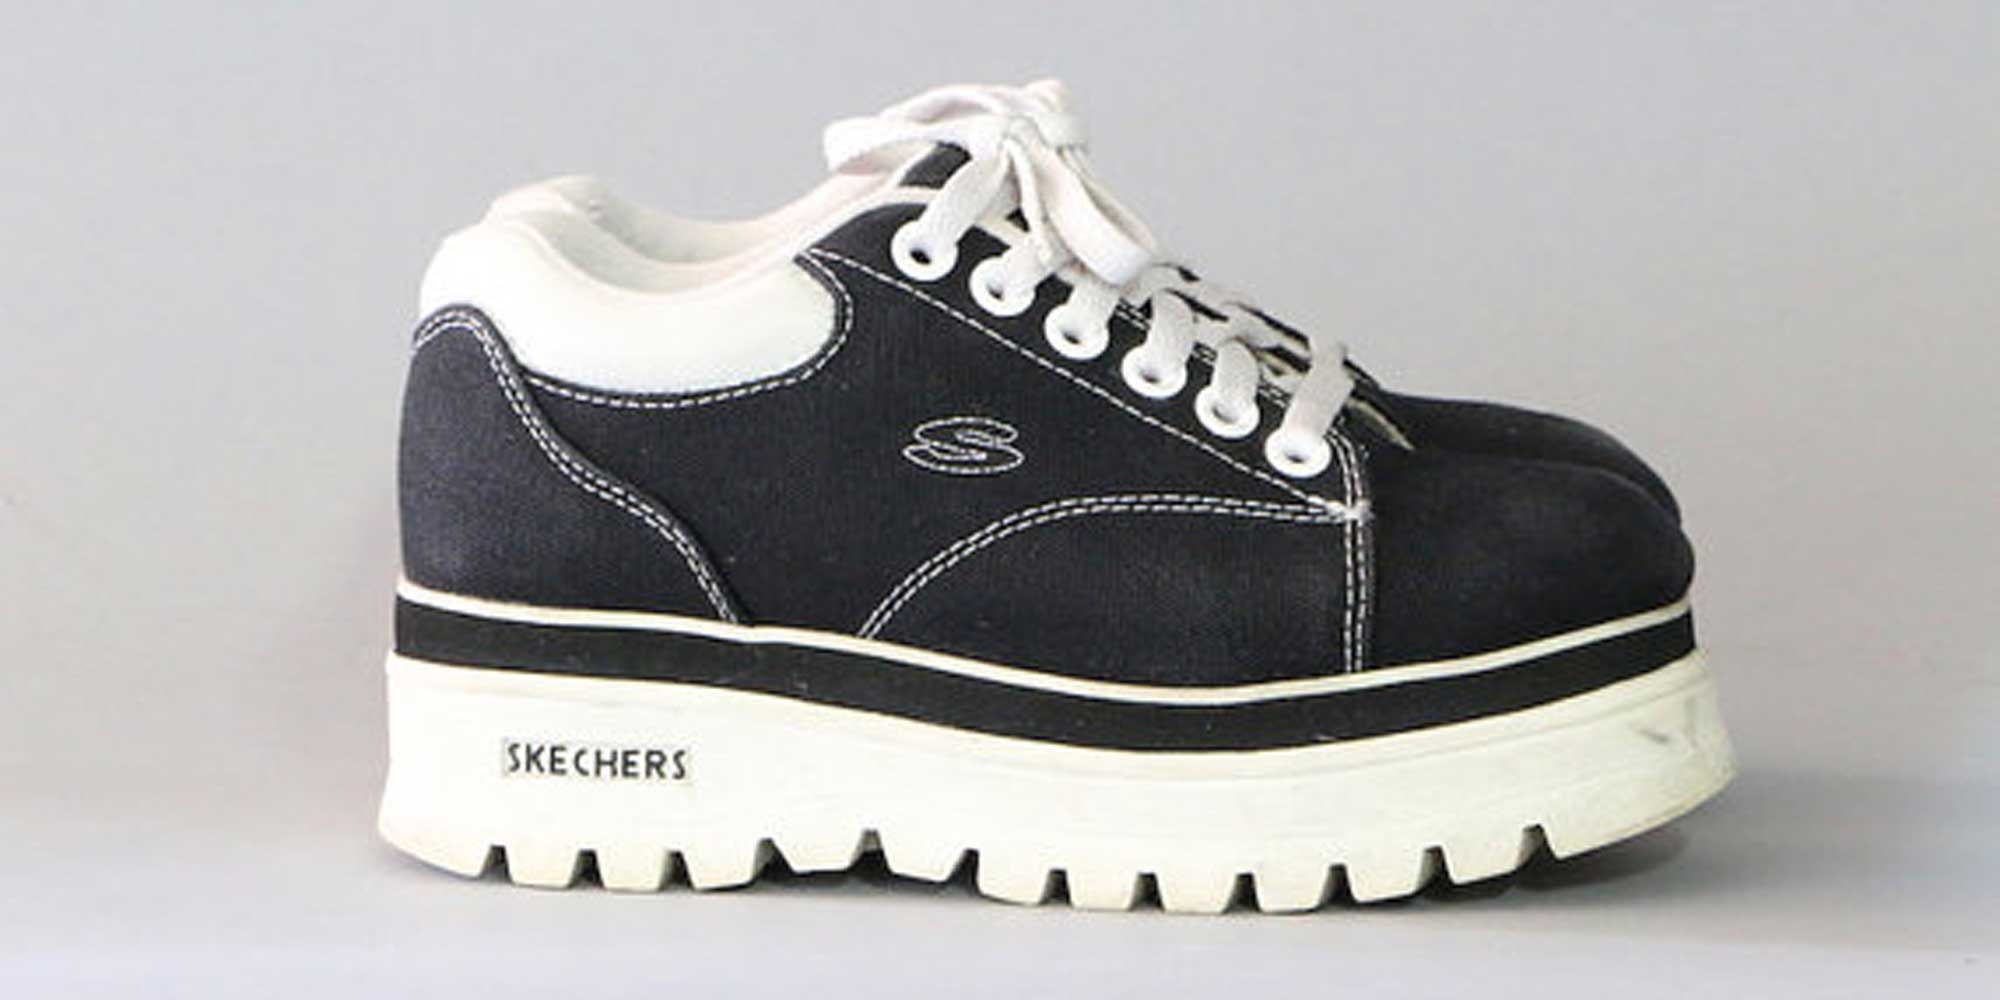 90s white platform sneakers